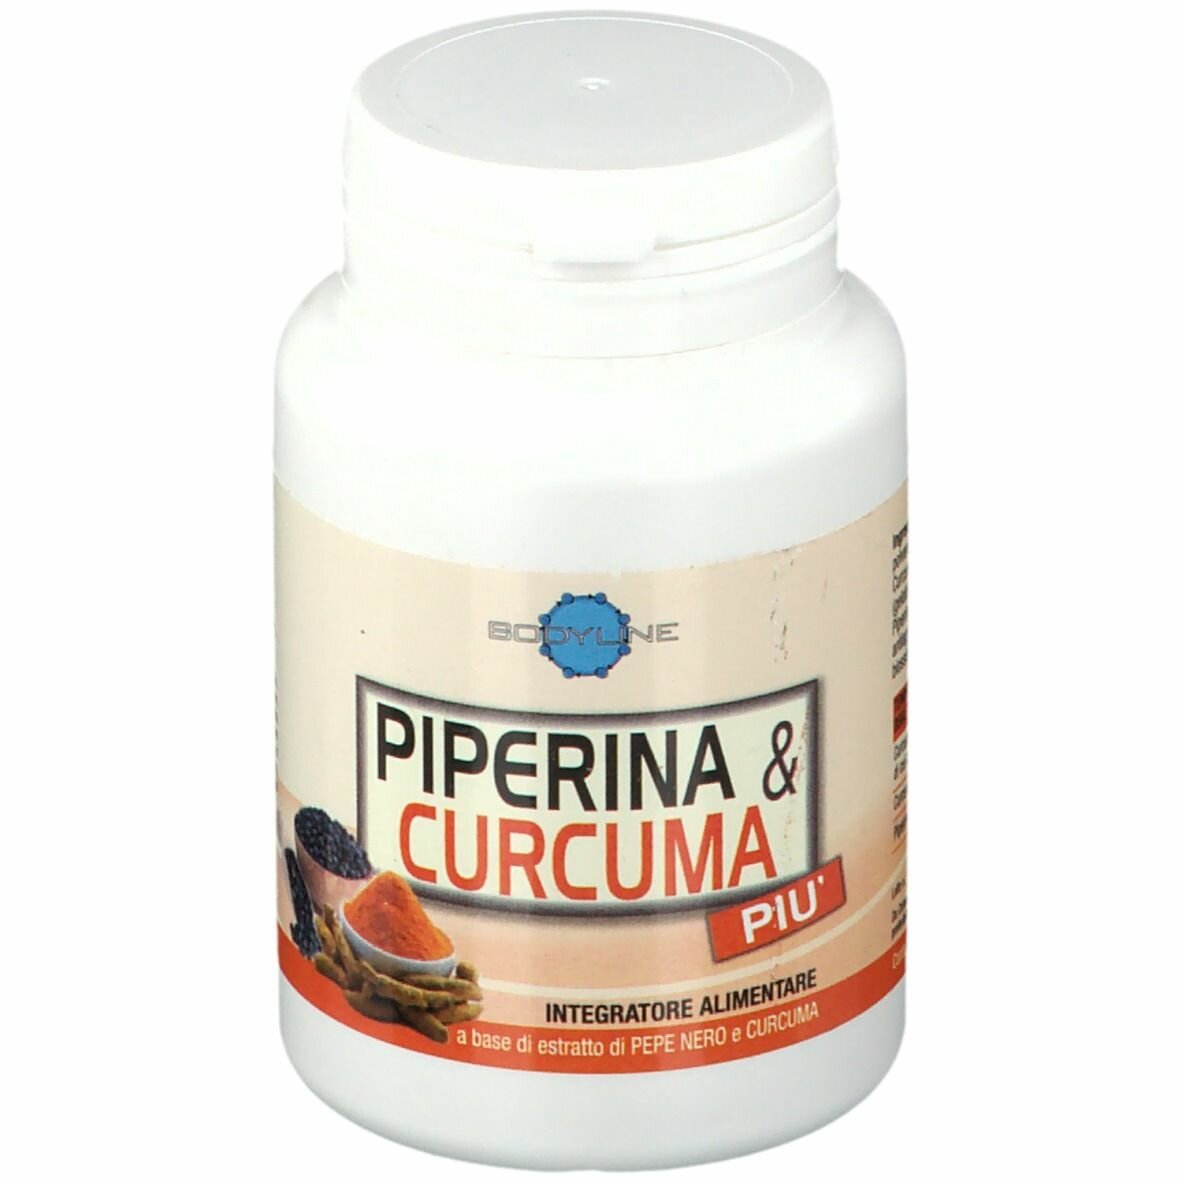 Piperina & curcuma piu' 60 capsule img